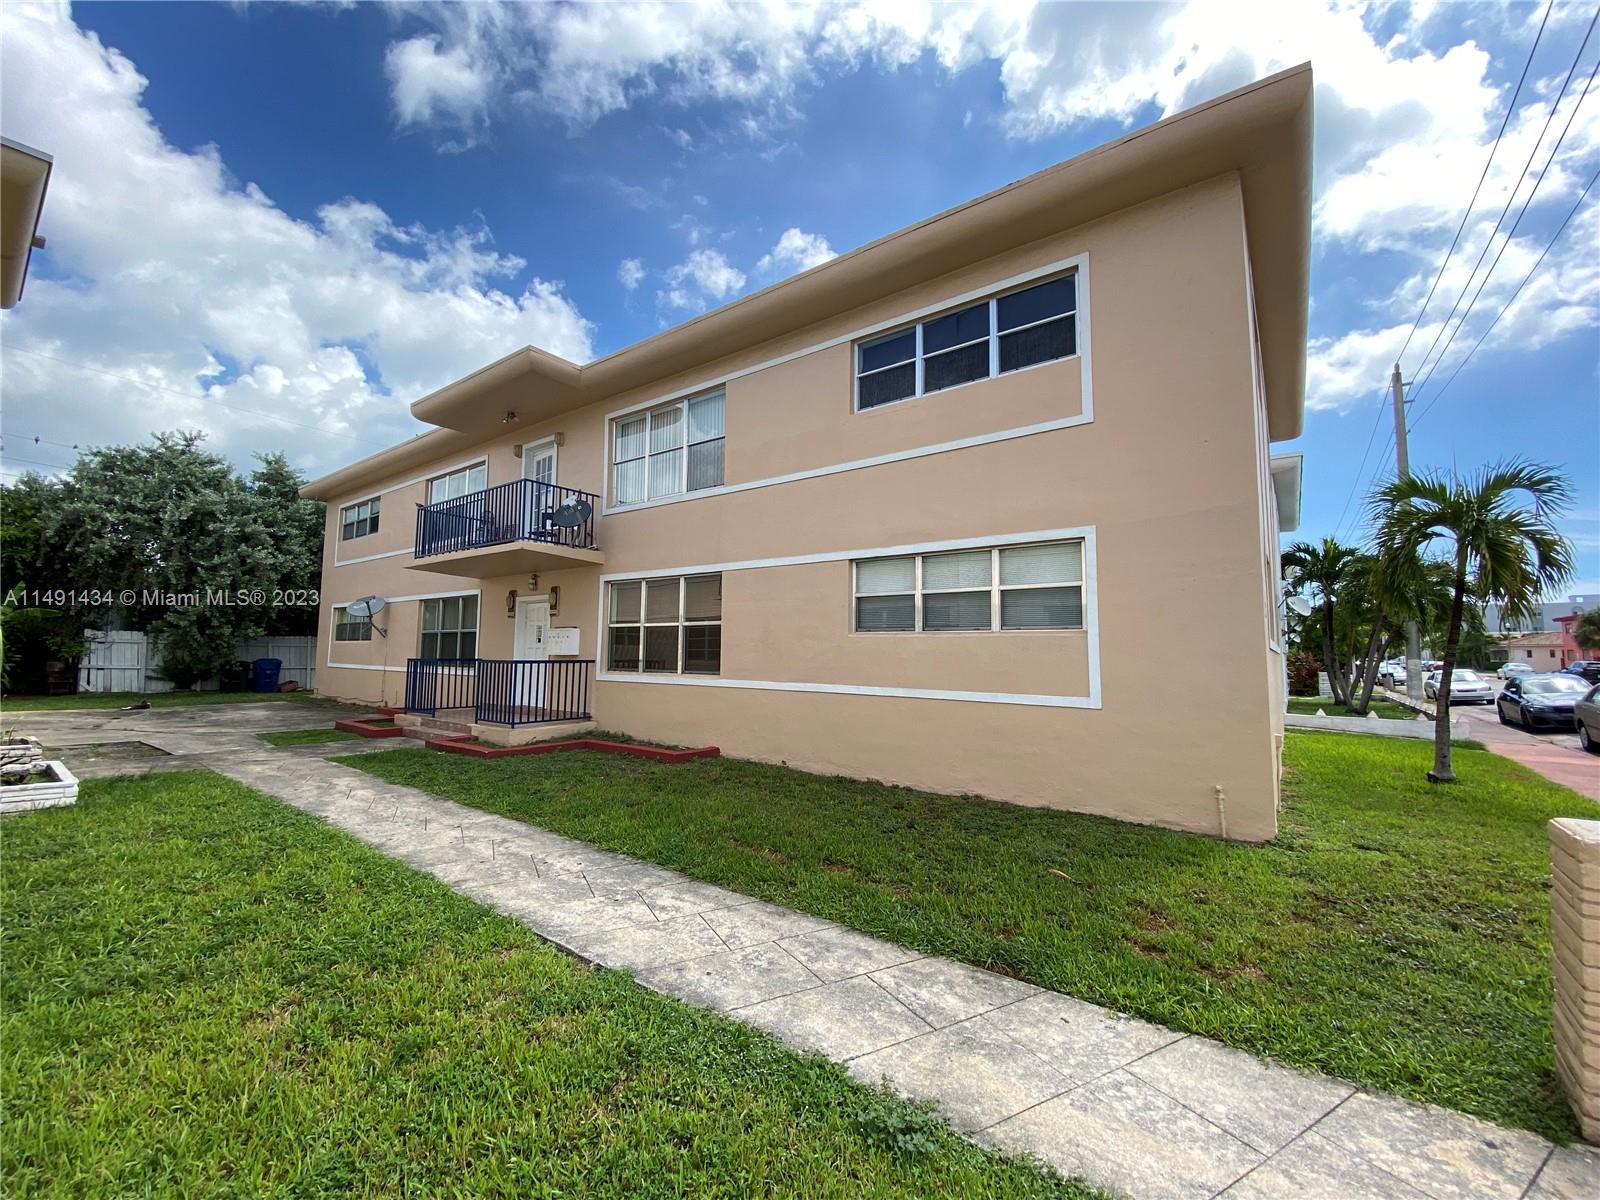 Rental Property at 825 85th St St, Miami Beach, Miami-Dade County, Florida -  - $1,425,000 MO.